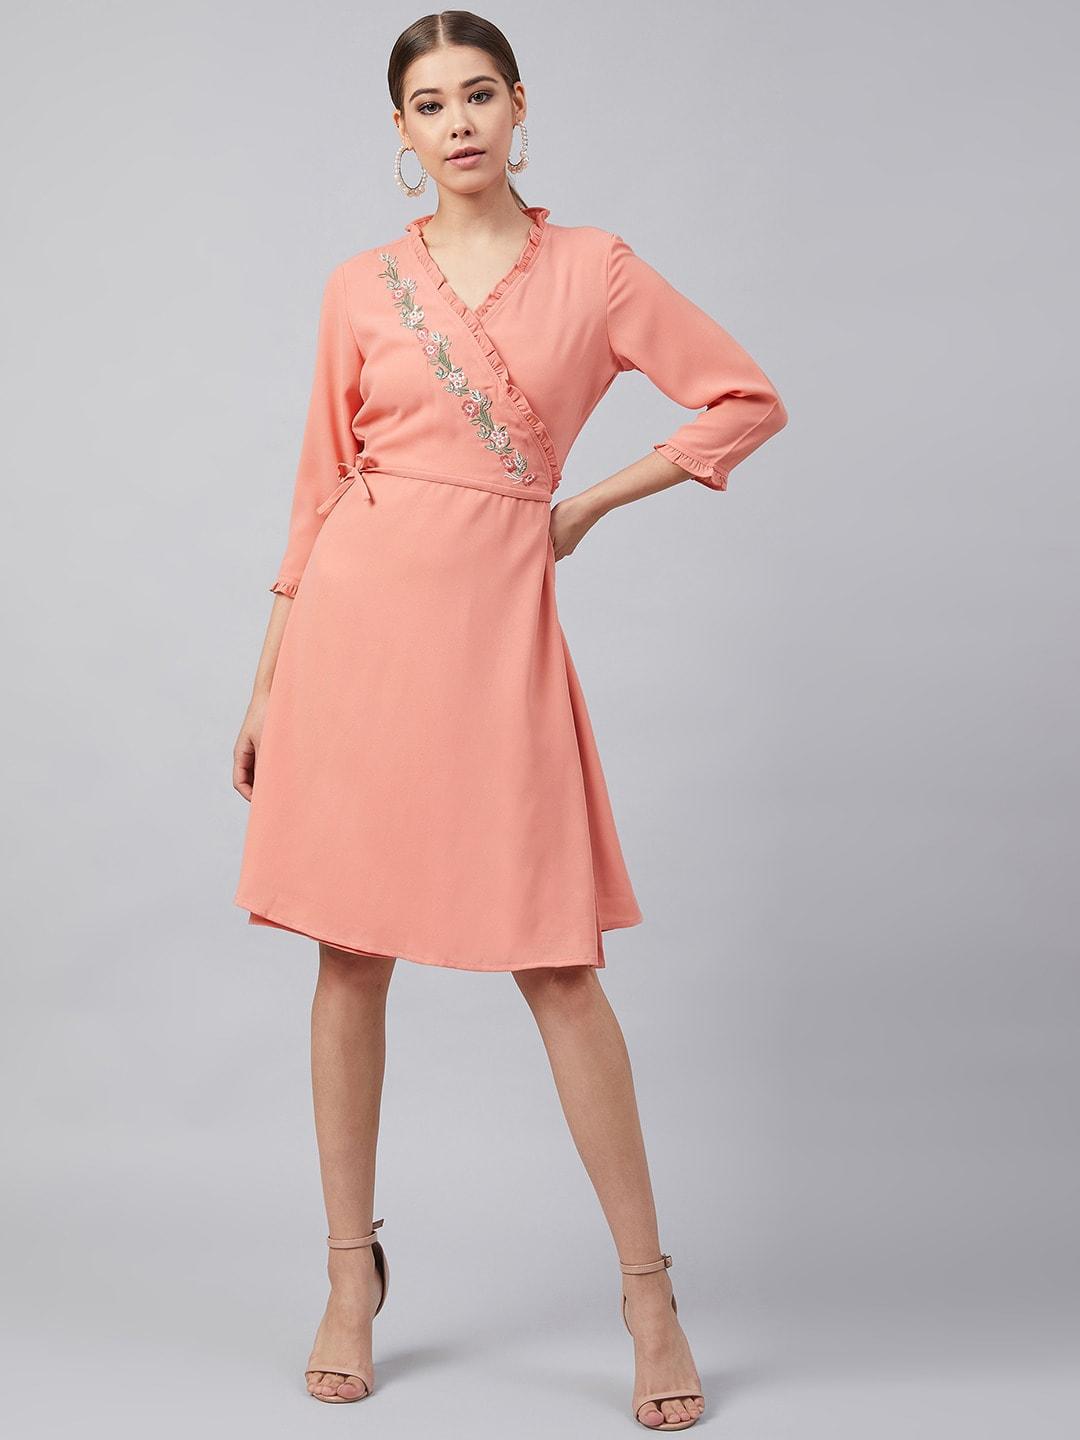 Marie Claire Women Peach Solid Wrap Dress